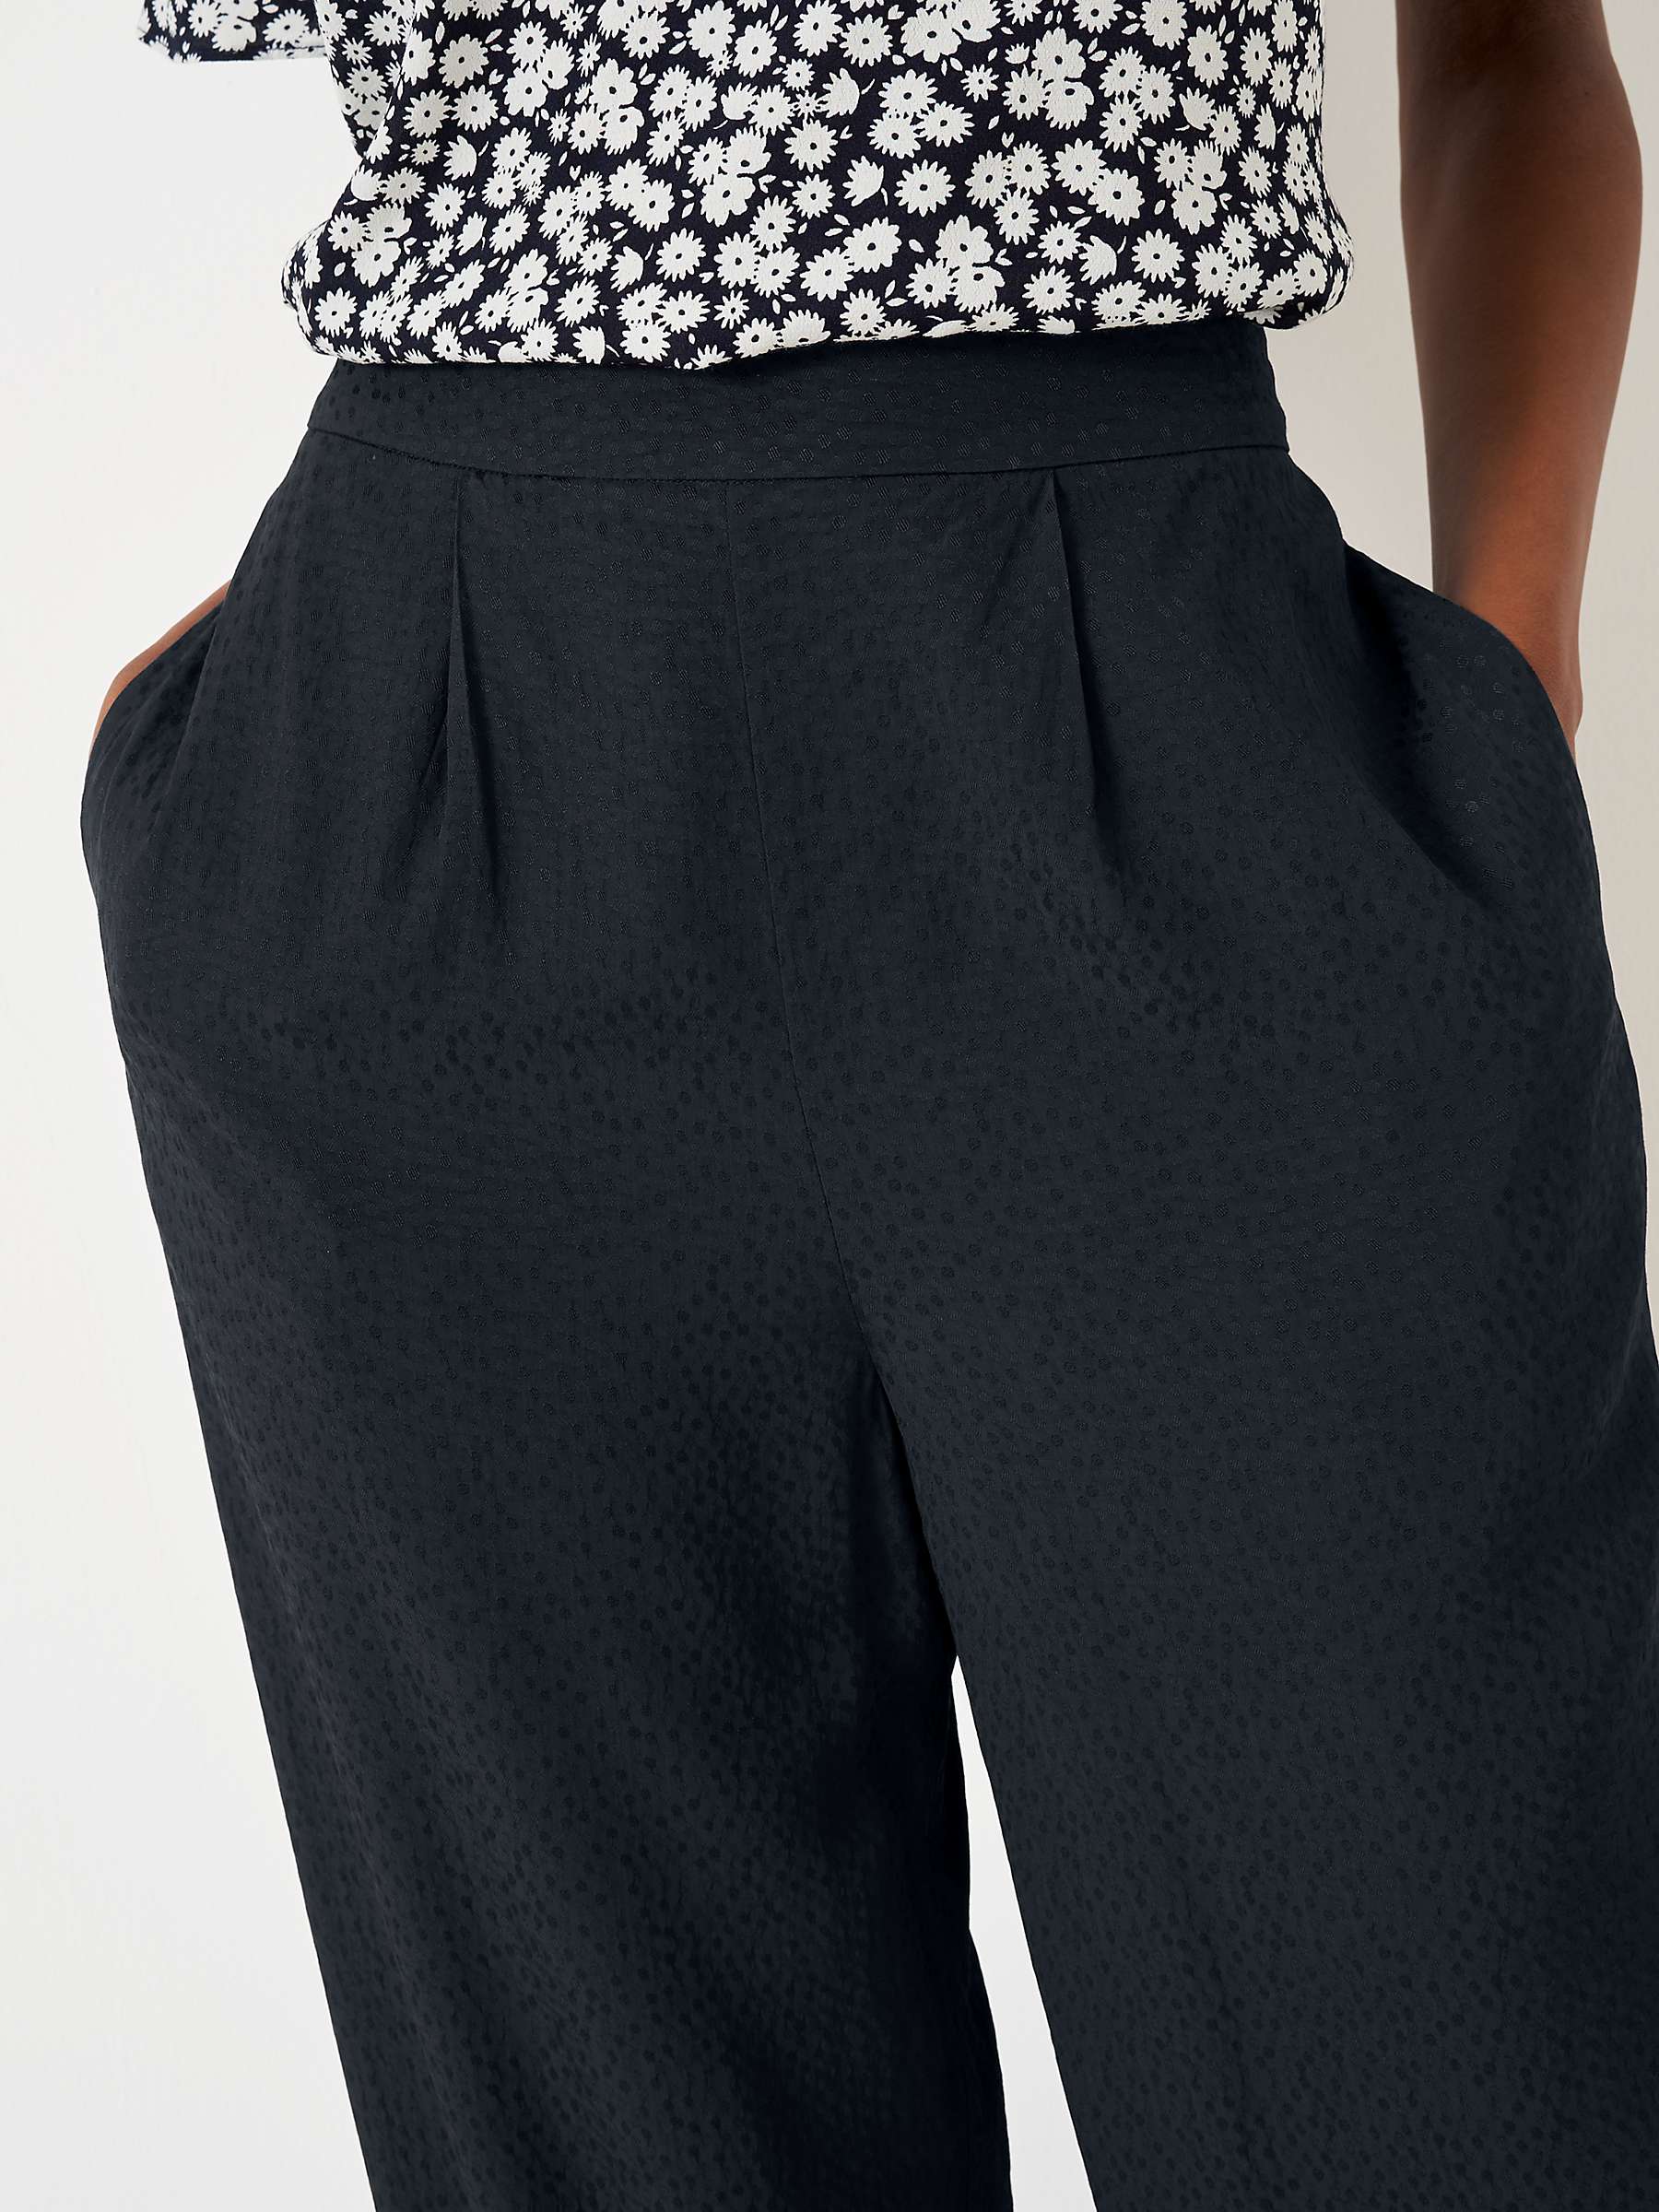 Buy Crew Clothing Jacquard Wide Leg Trousers, Black Online at johnlewis.com